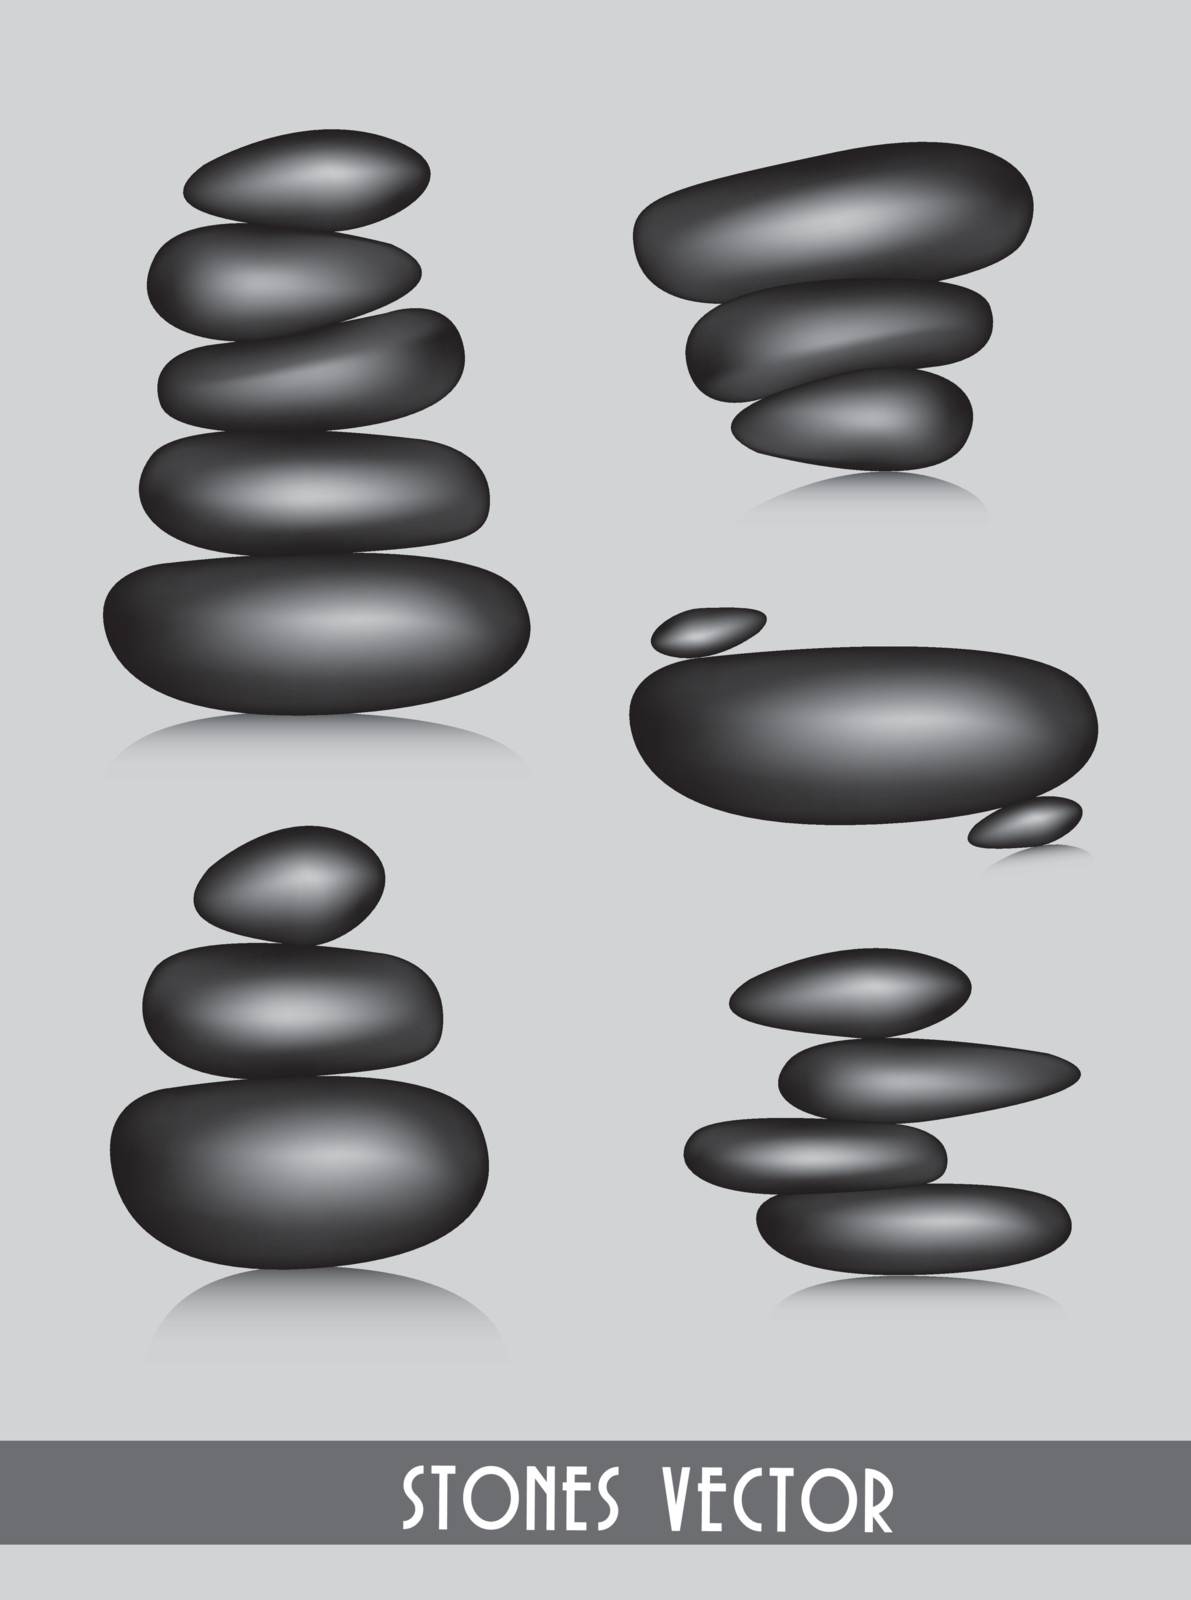 black stones spa over gray background. vector illustration